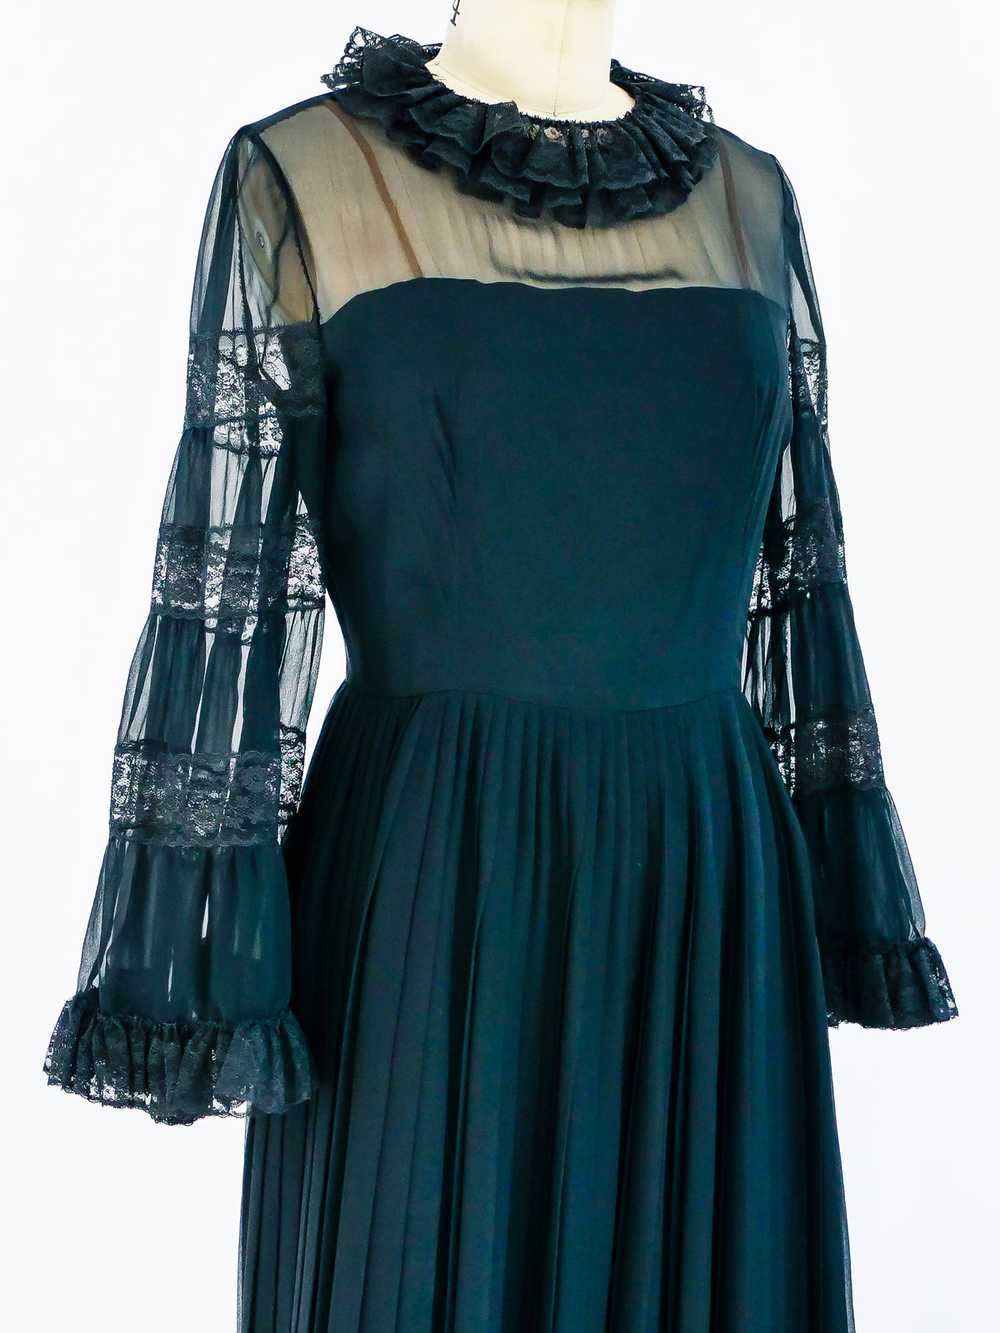 Elizabeth Arden Black Chiffon Gown - image 5